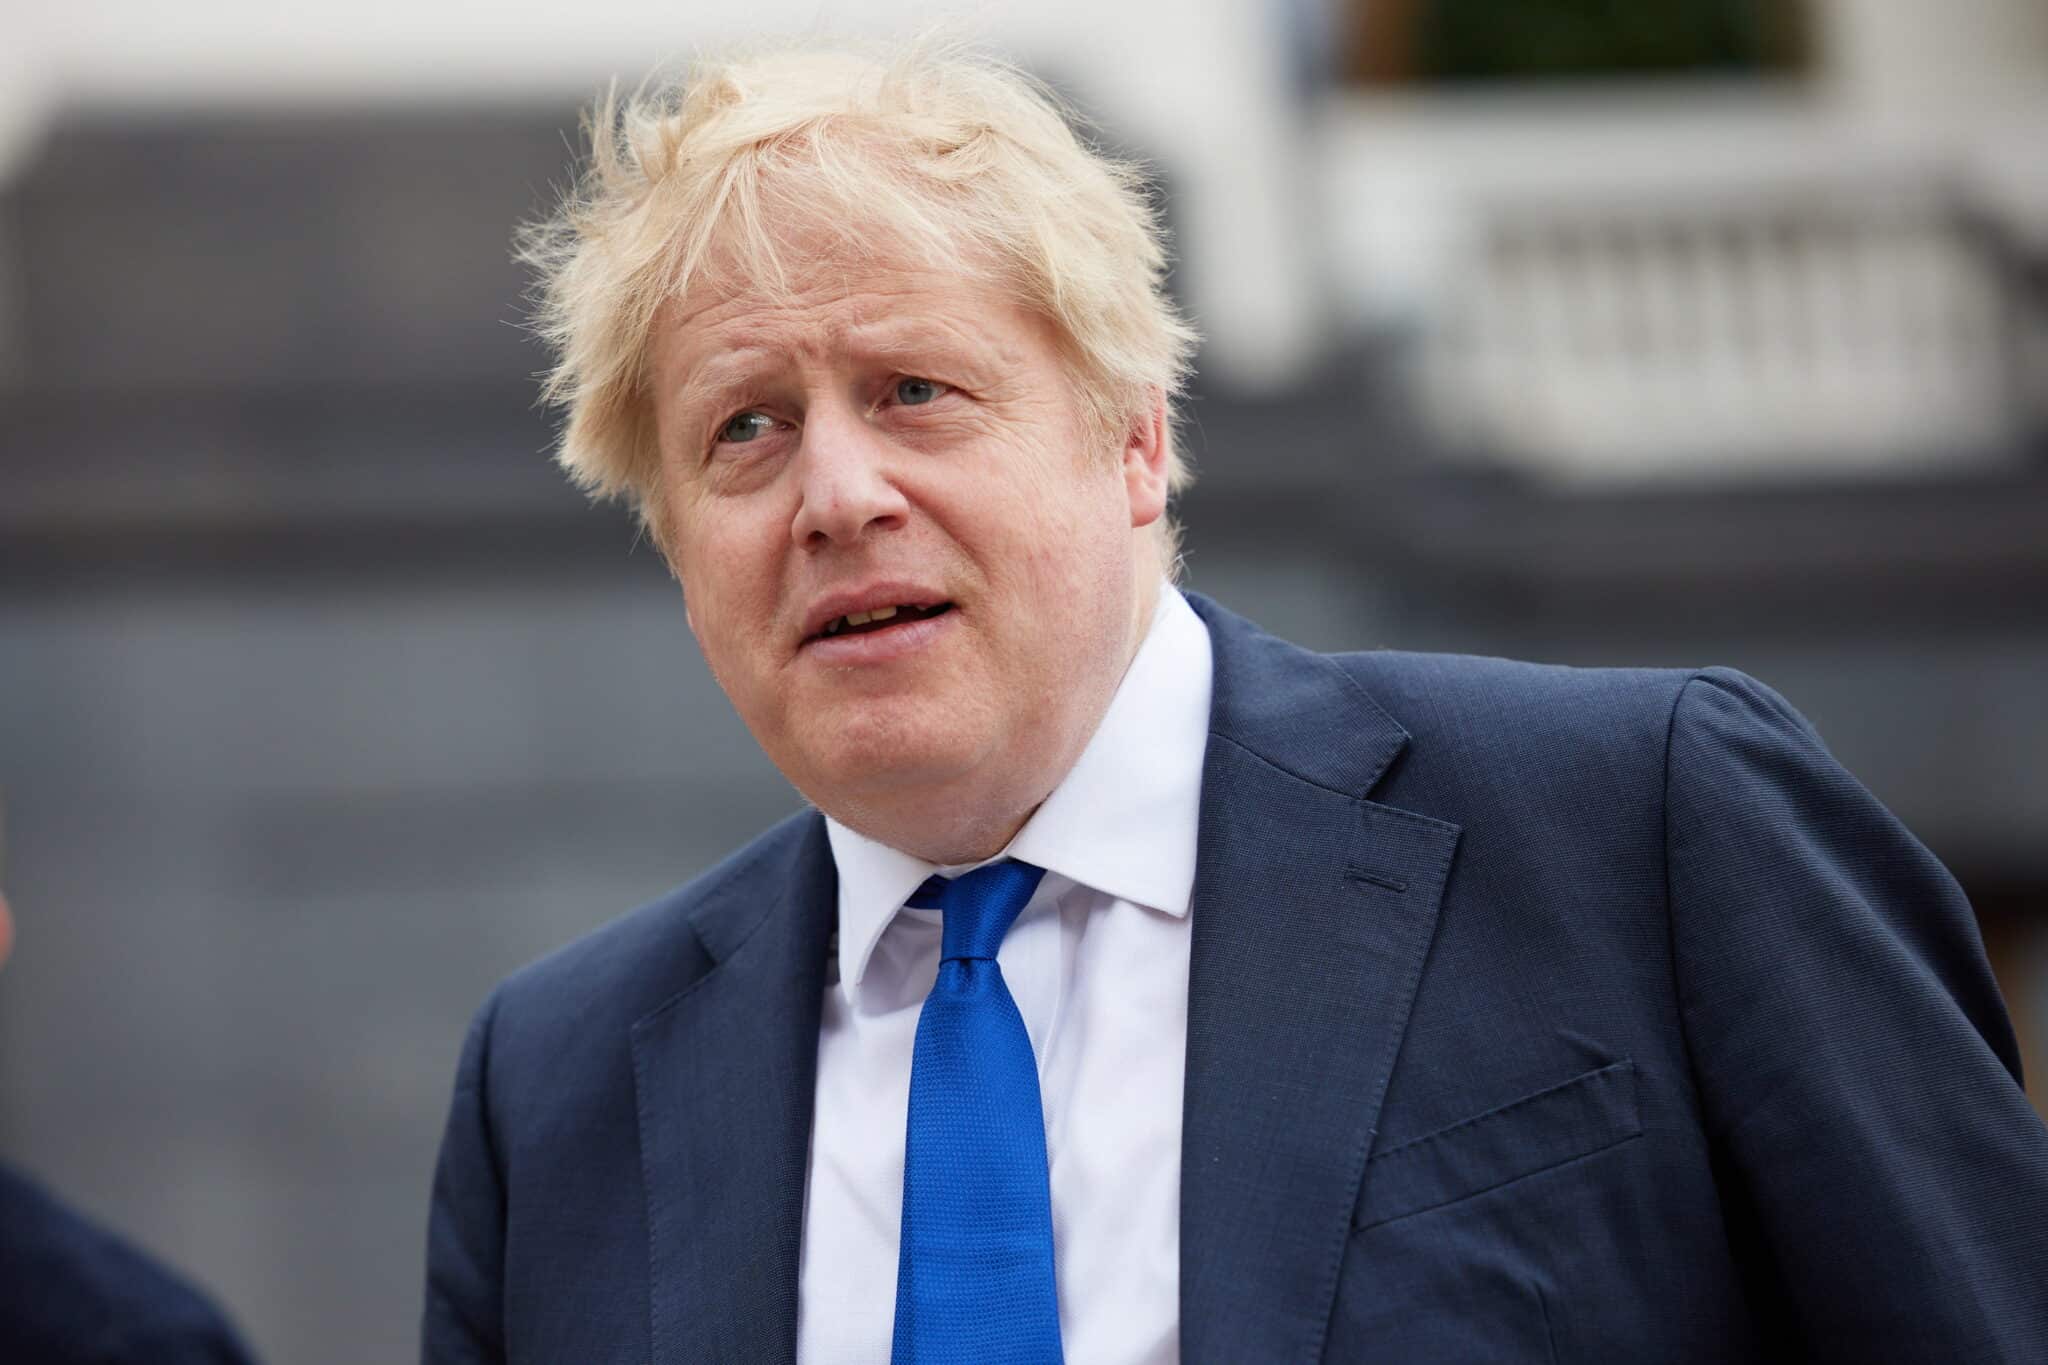 Boris Johnson planea enviar a Ruanda a los inmigrantes que cruzan el Canal de la Mancha